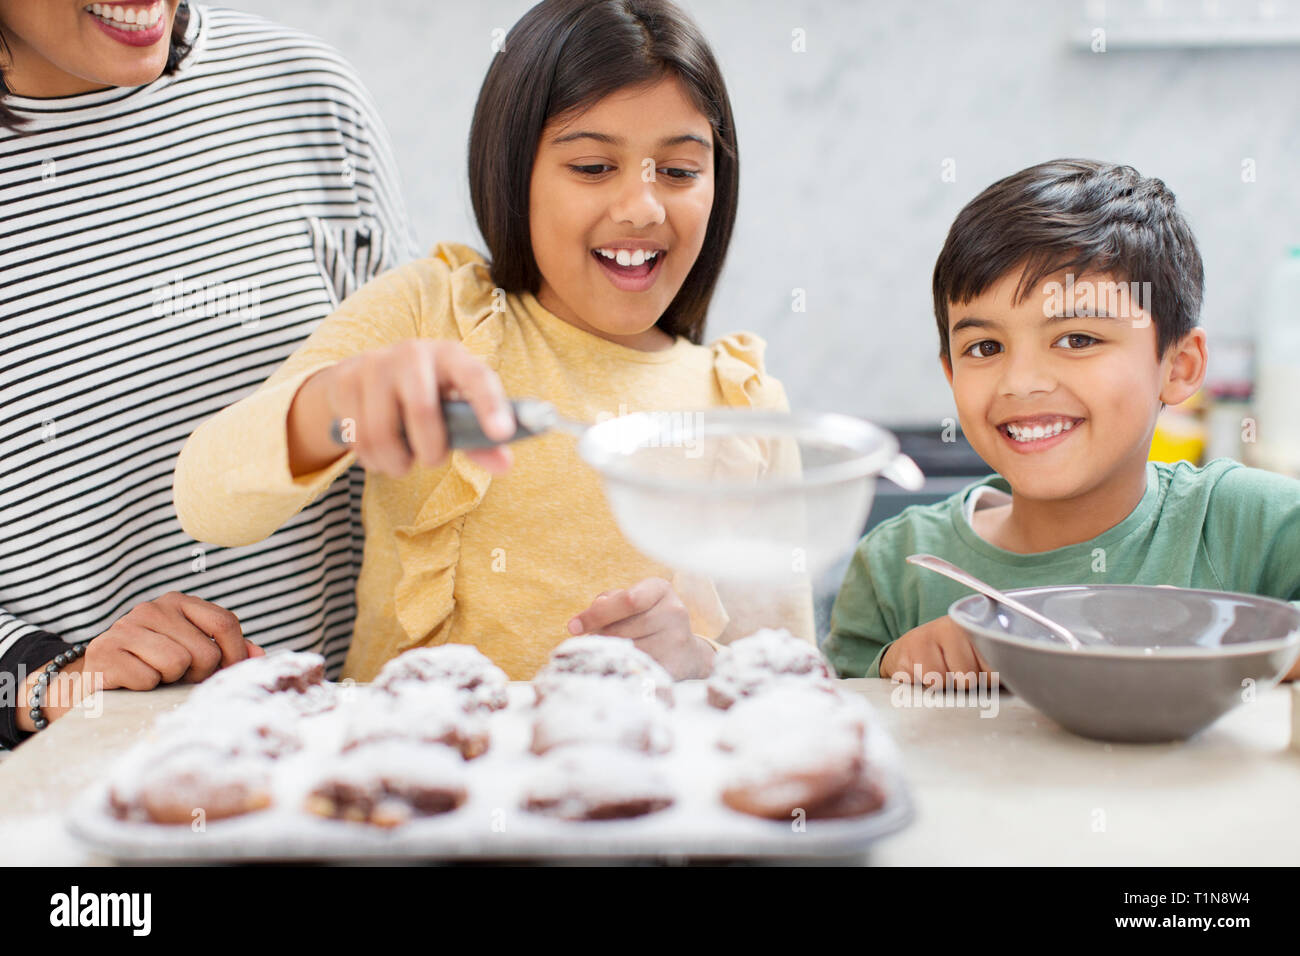 Portrait happy family baking in kitchen Stock Photo